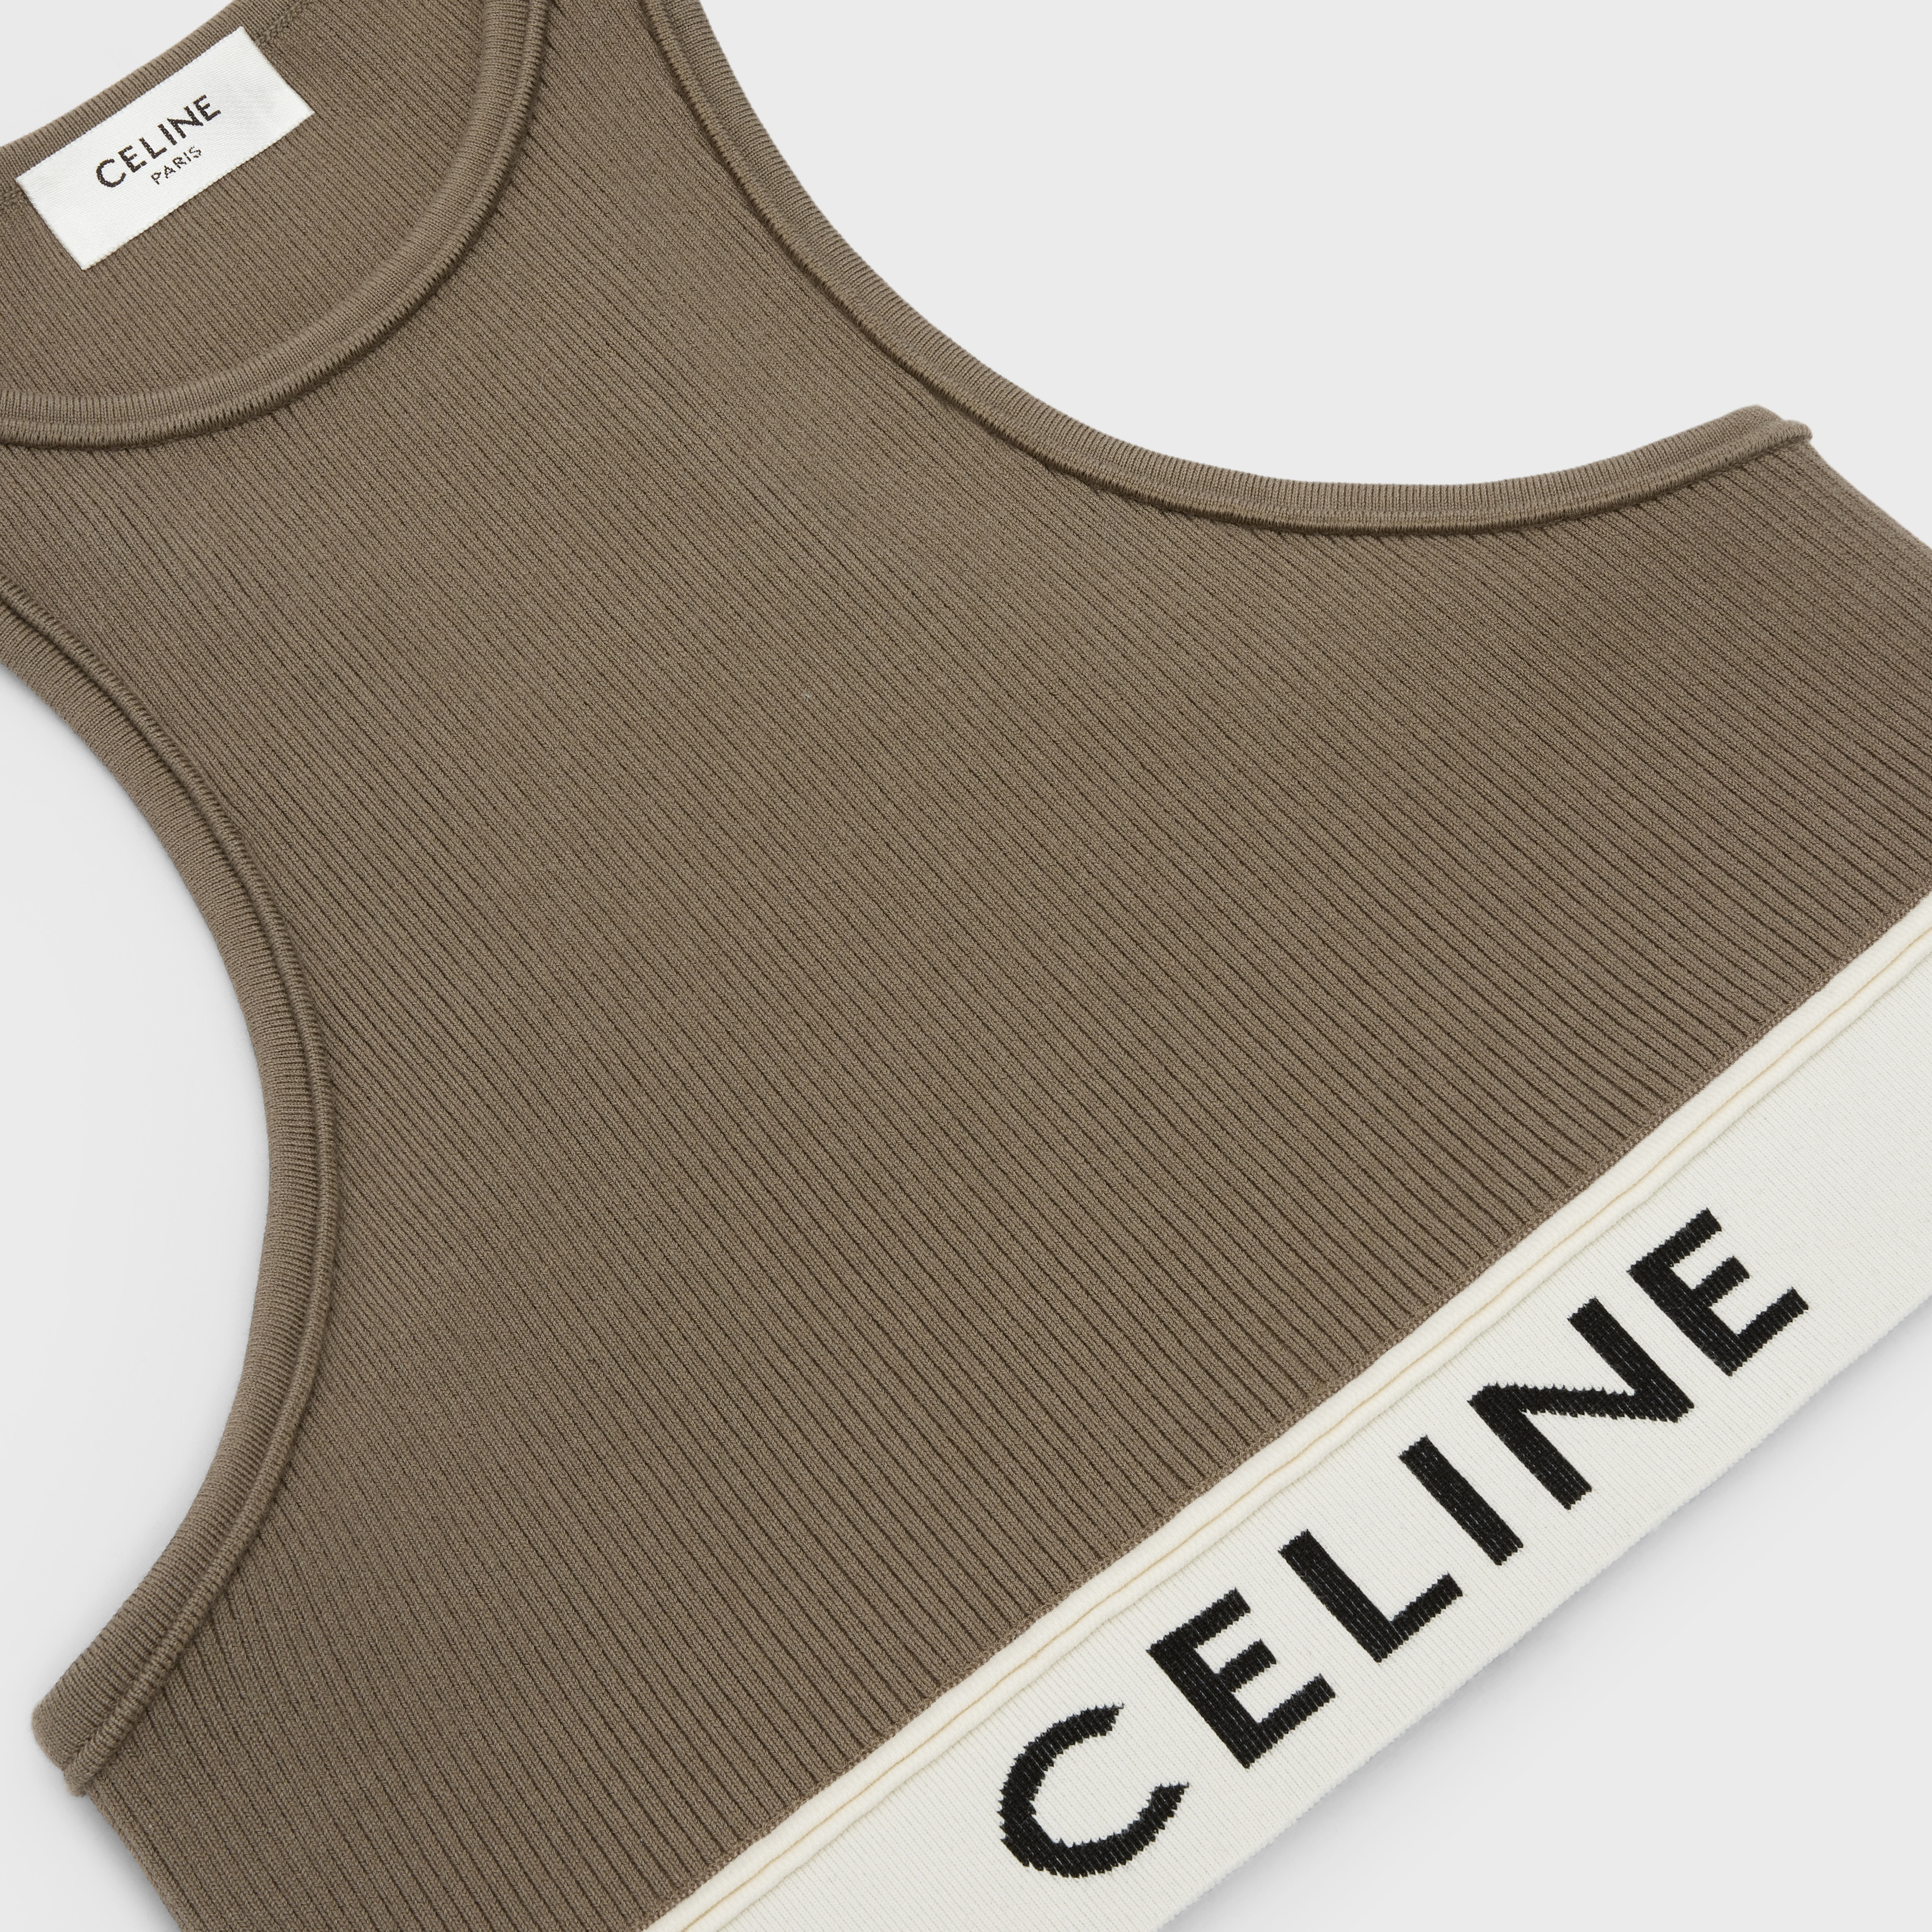 Celine sports bra in athletic knit - 3